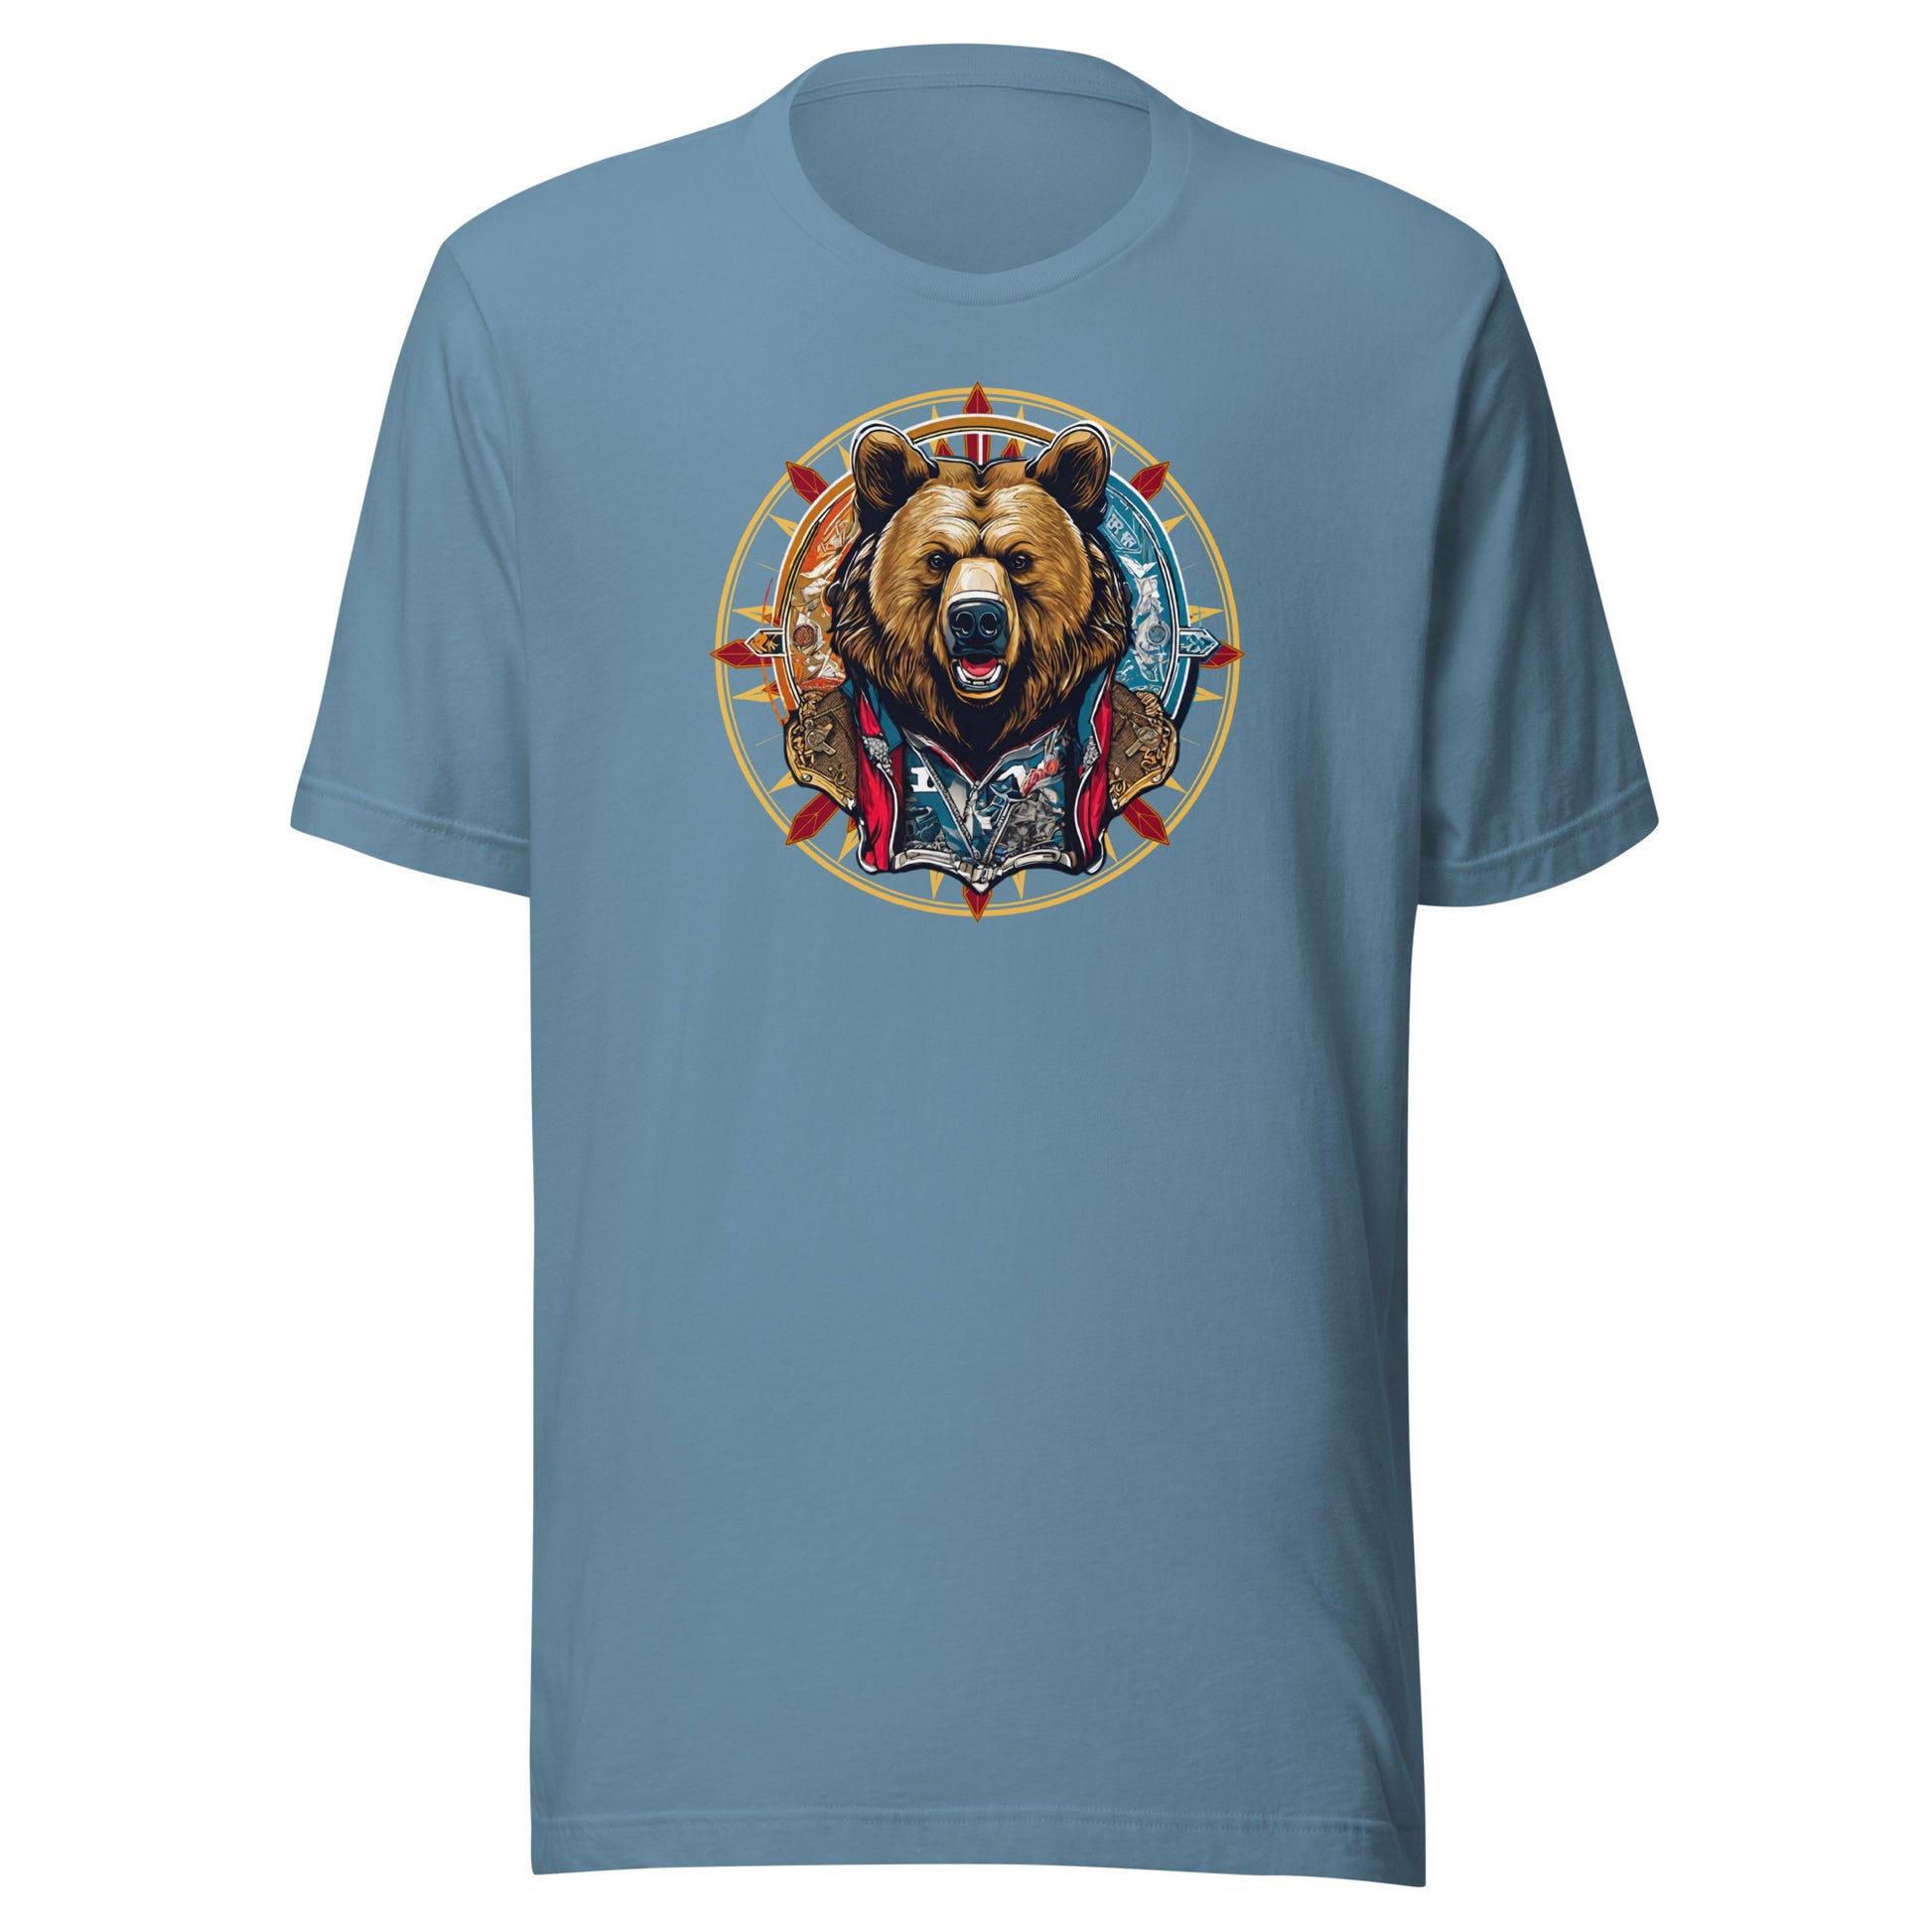 Bear Emblem Men's Graphic T-Shirt Steel Blue